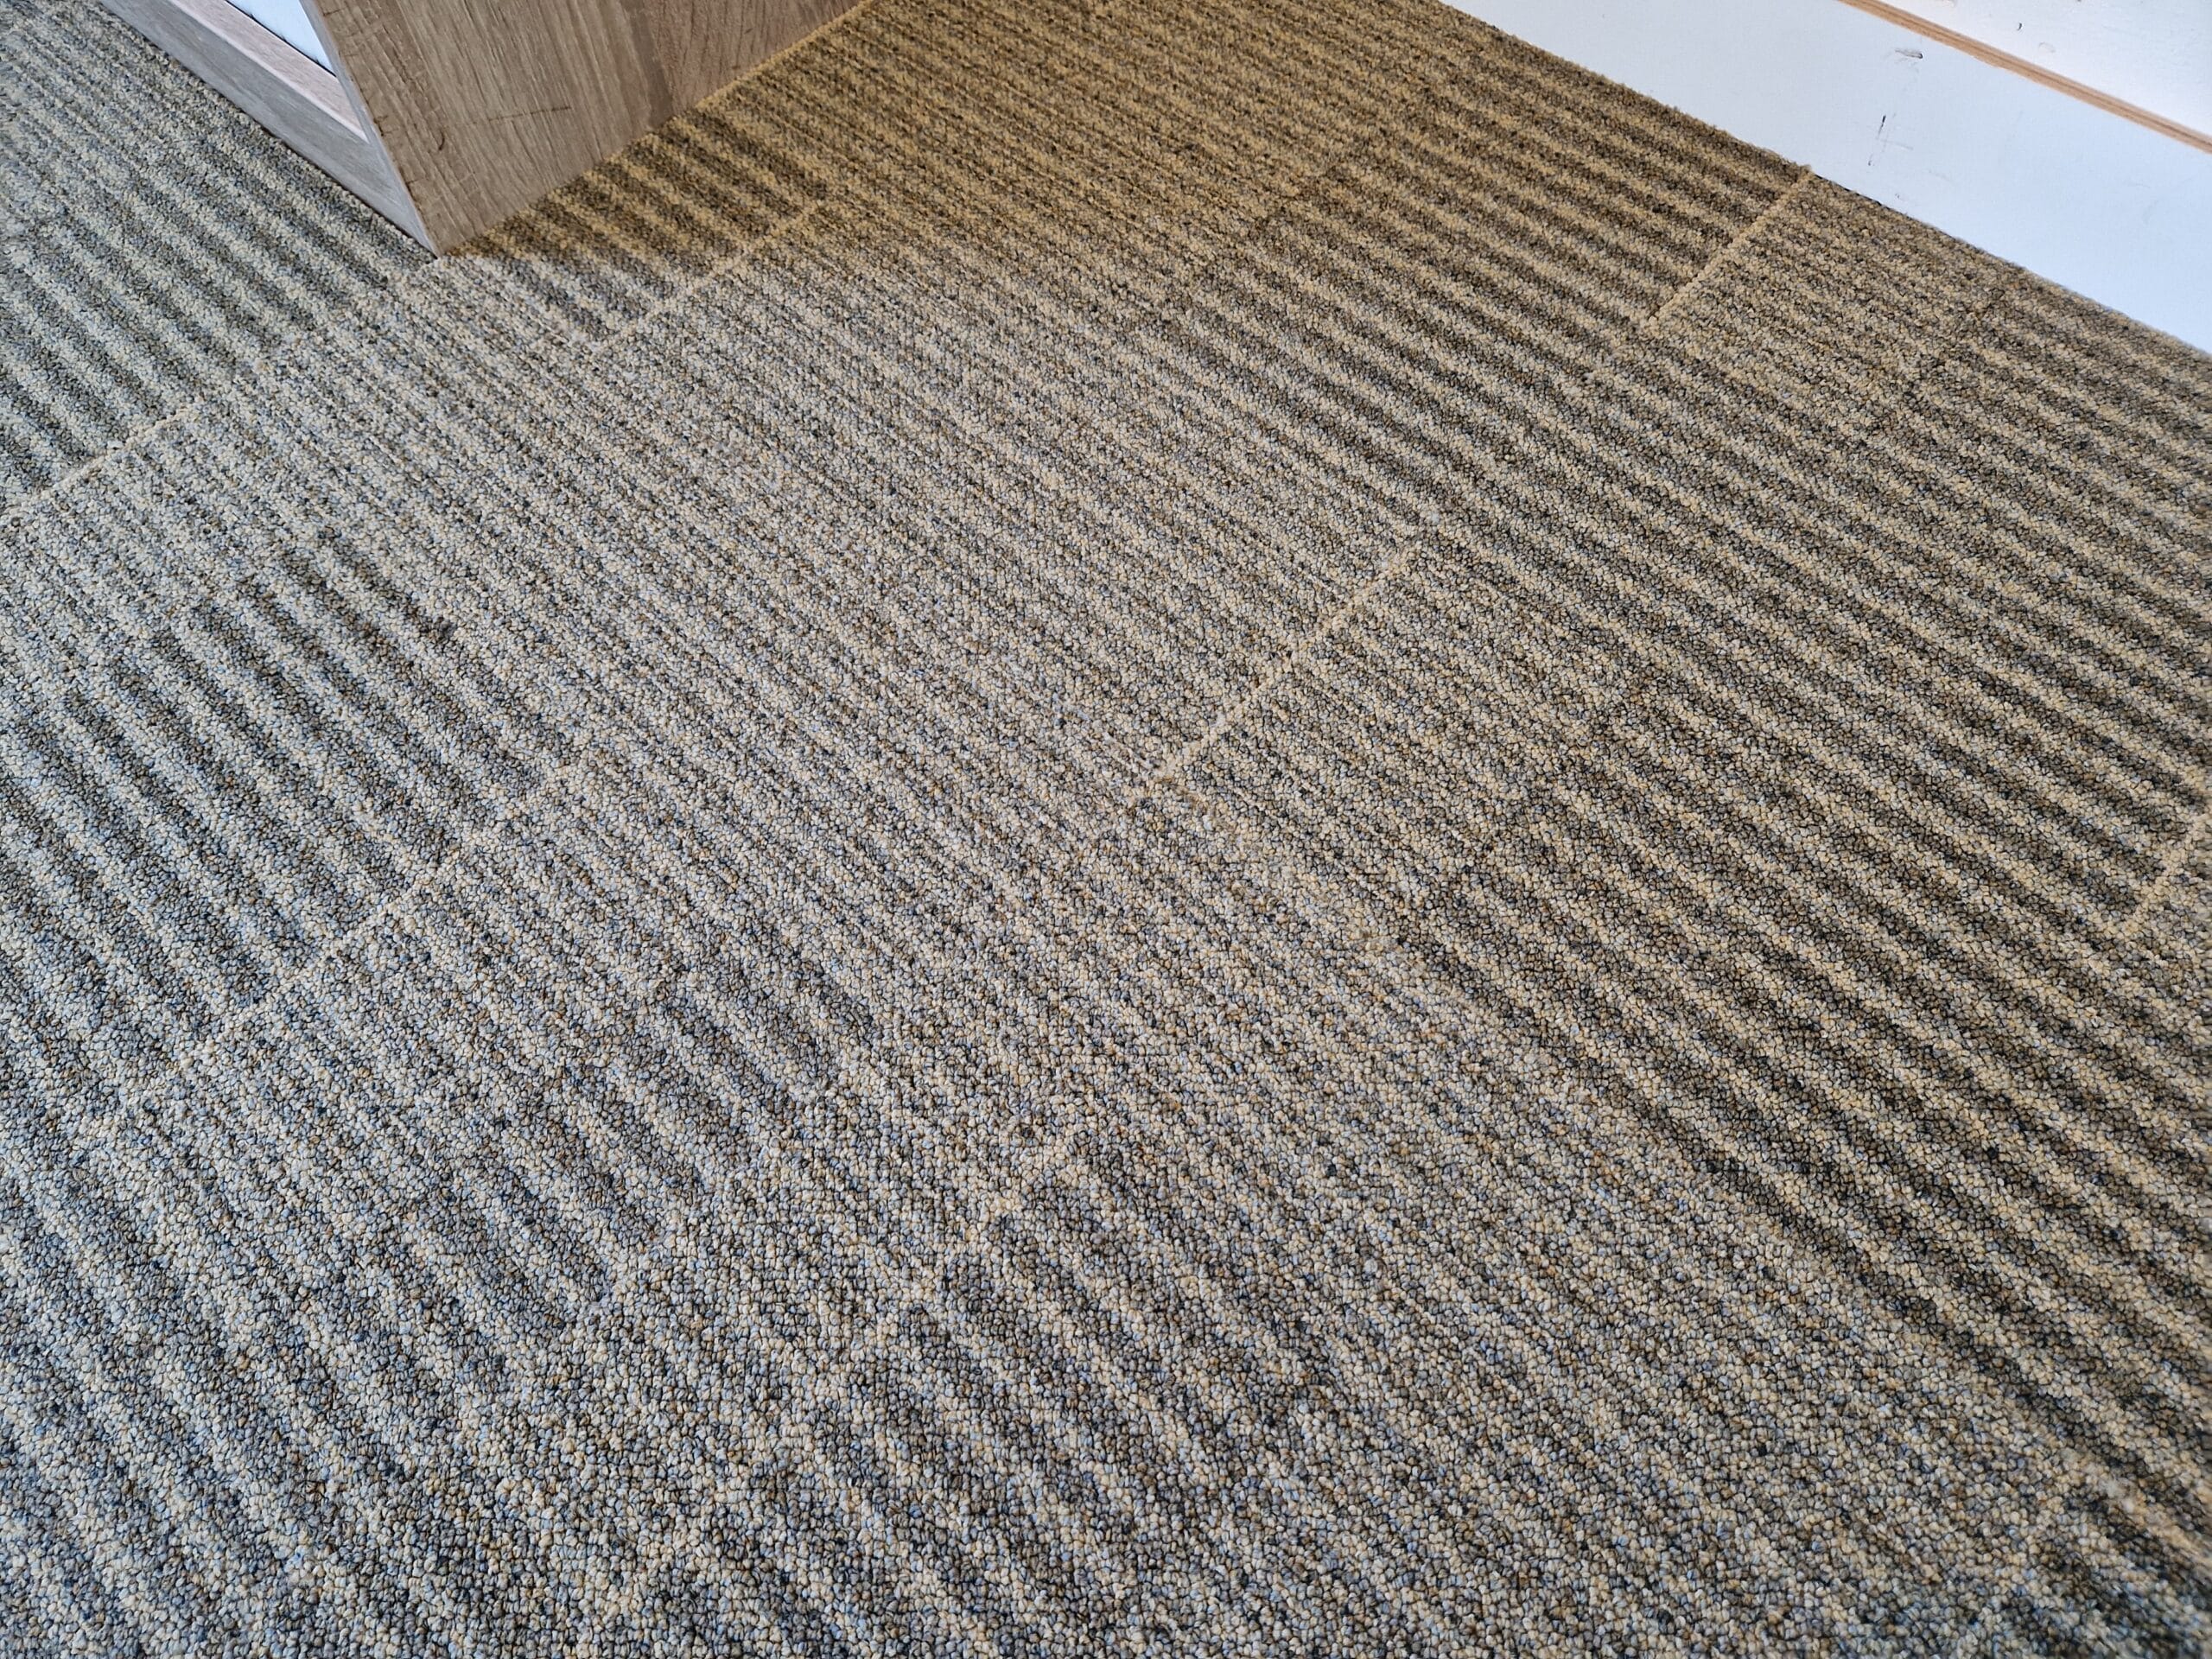 tapijttegels beige reuse a kwaliteit 46.5x46.5cm